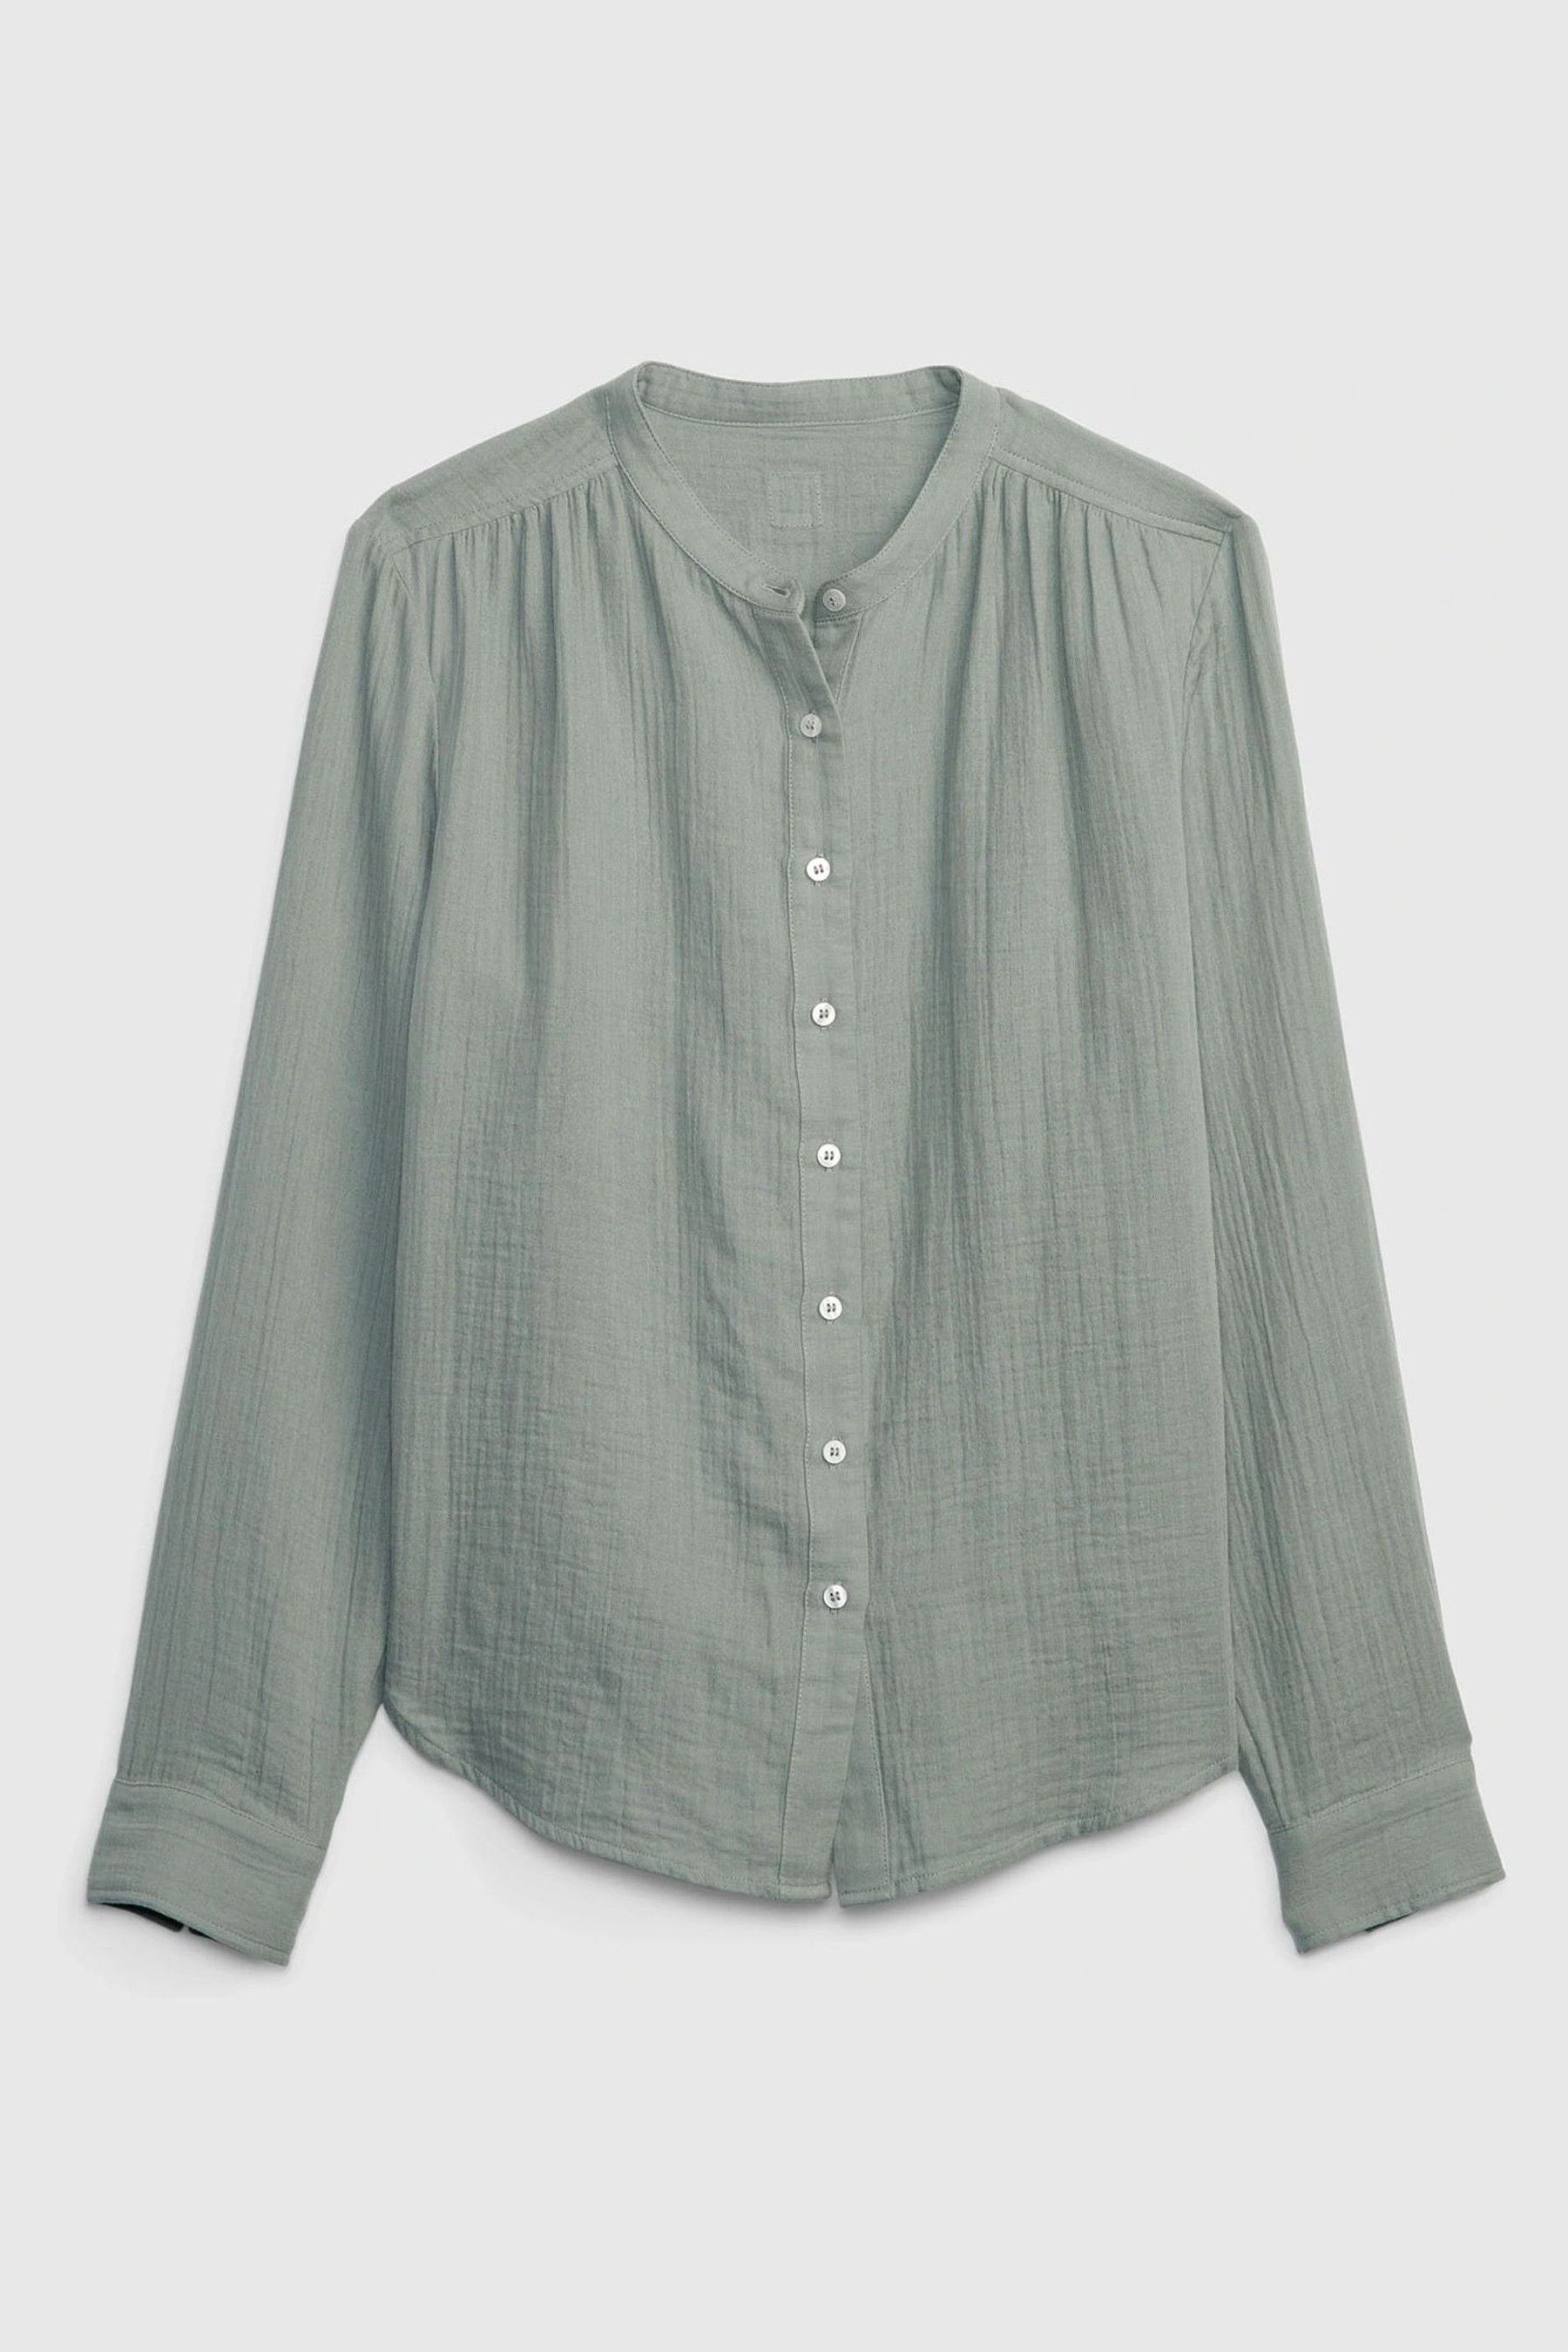 Buy Gap Crinkle Gauze Shirt from the Gap online shop